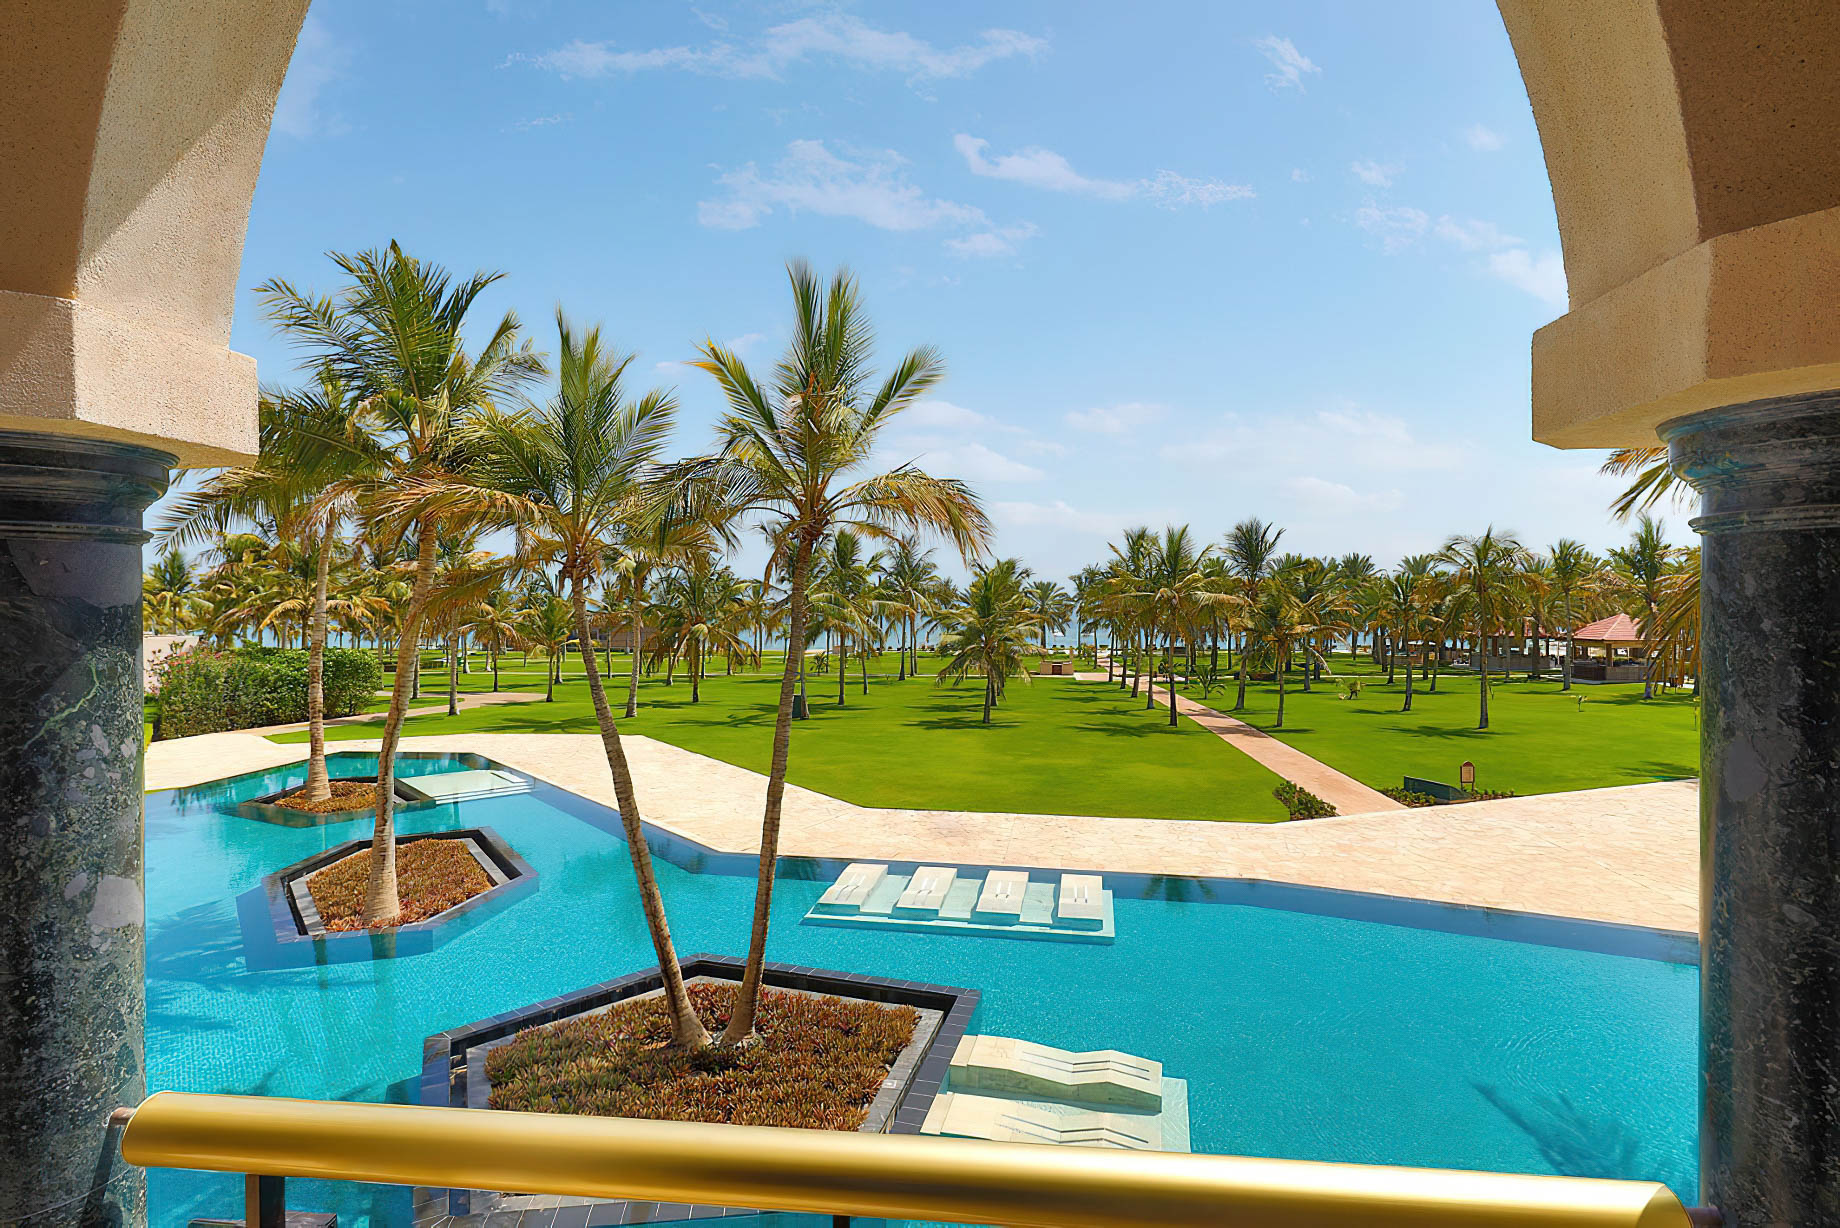 Al Bustan Palace, A Ritz-Carlton Hotel – Muscat, Oman – Deluxe Pool View Room Balcony